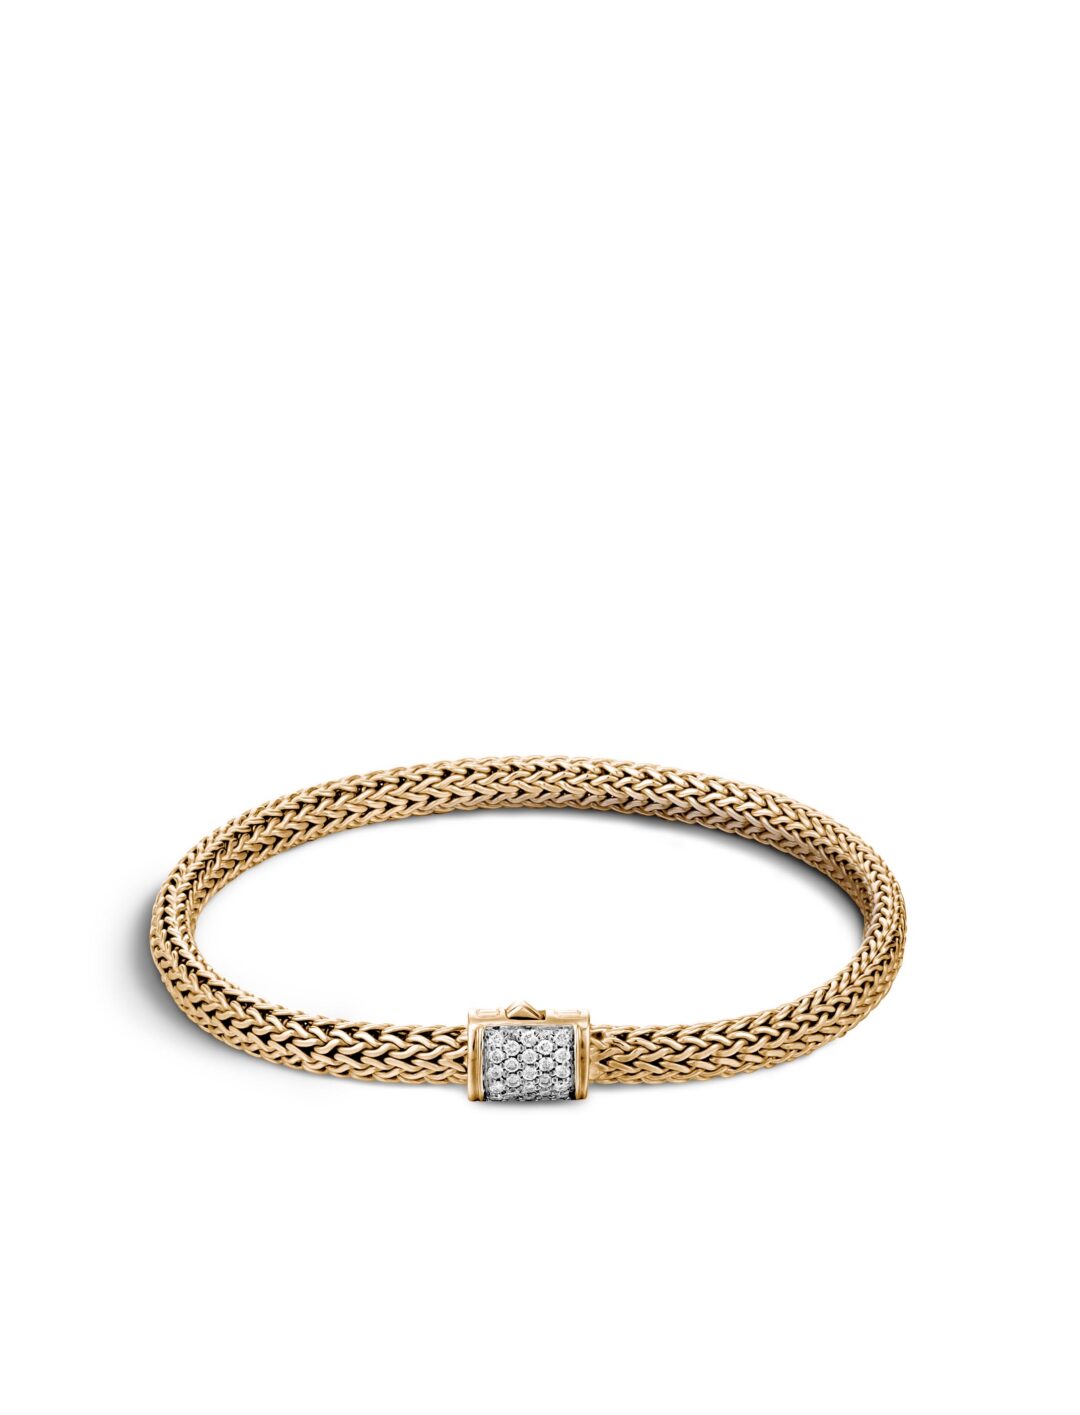 Classic Chain 5MM Bracelet in 18K Gold with Diamonds John Hardy Jewels in Paradise Aruba BGX96002DIA